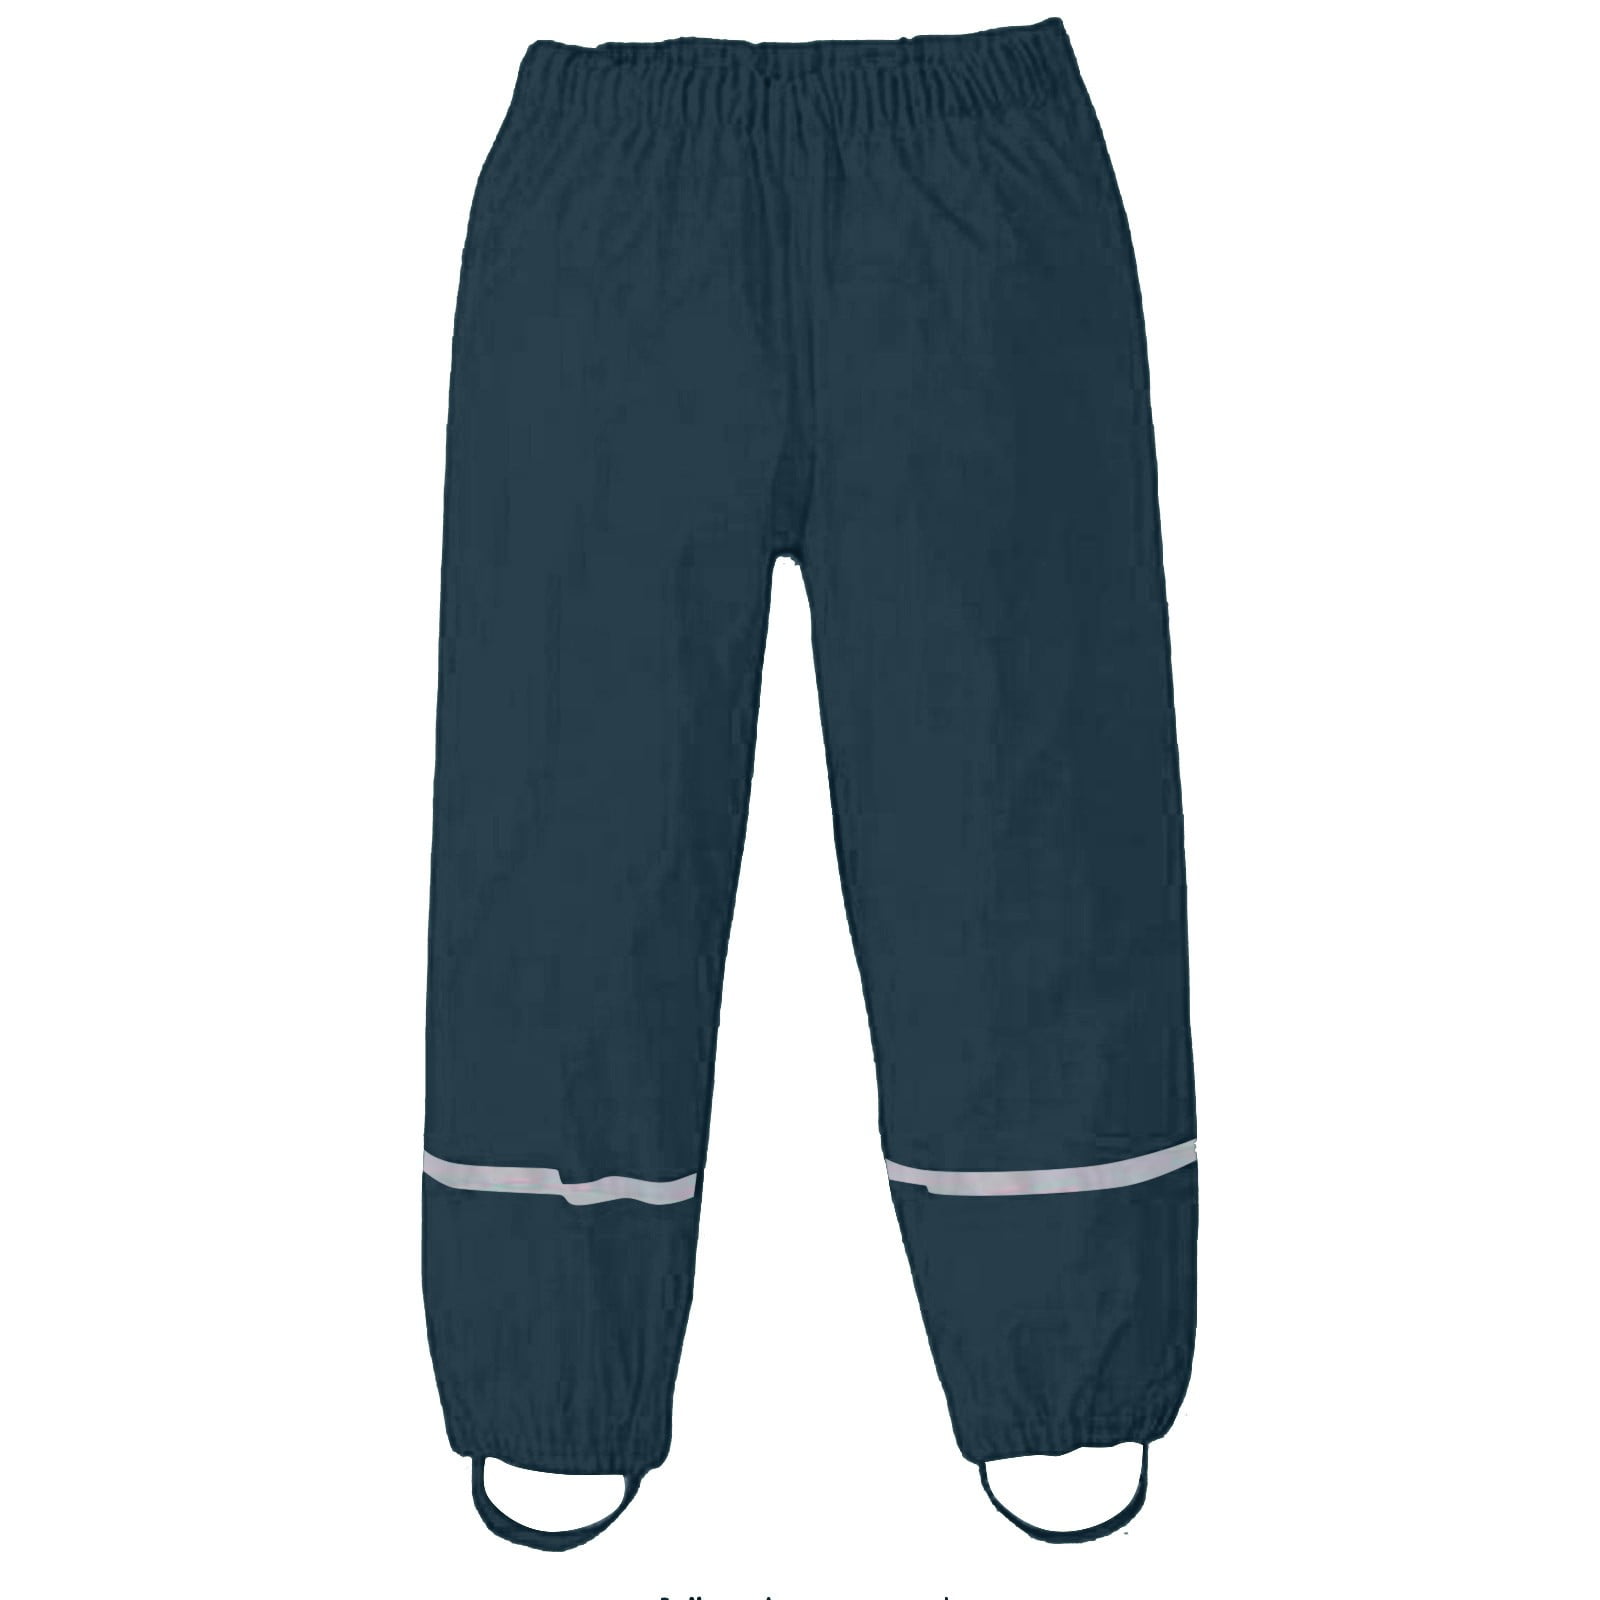 M2C Boys Girls Reflective Waterproof Rain Pants Lightweight Rainwear 